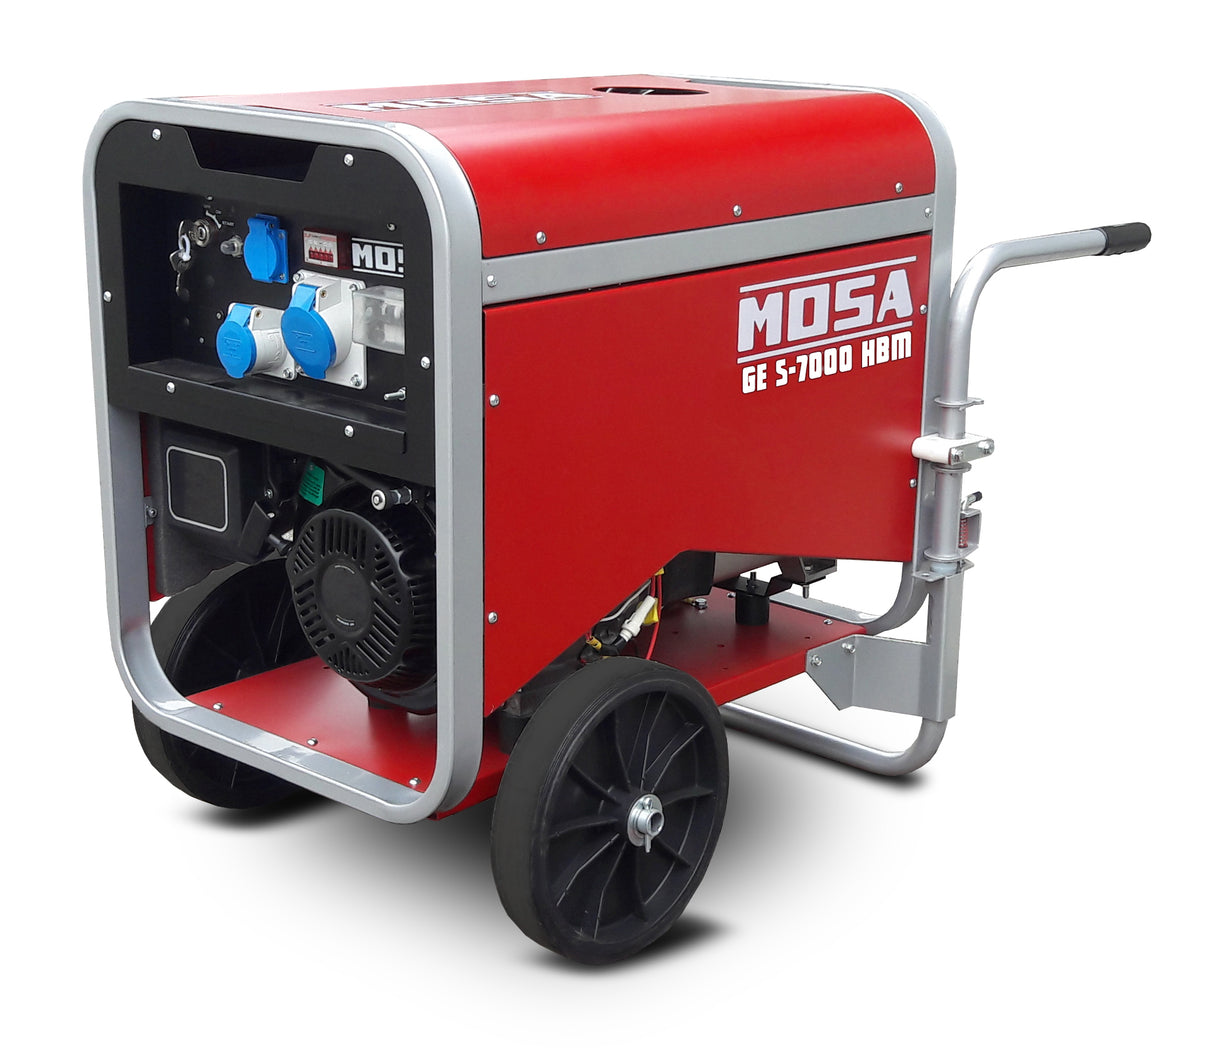 Portable power generator MOSA GES 7000 HBM